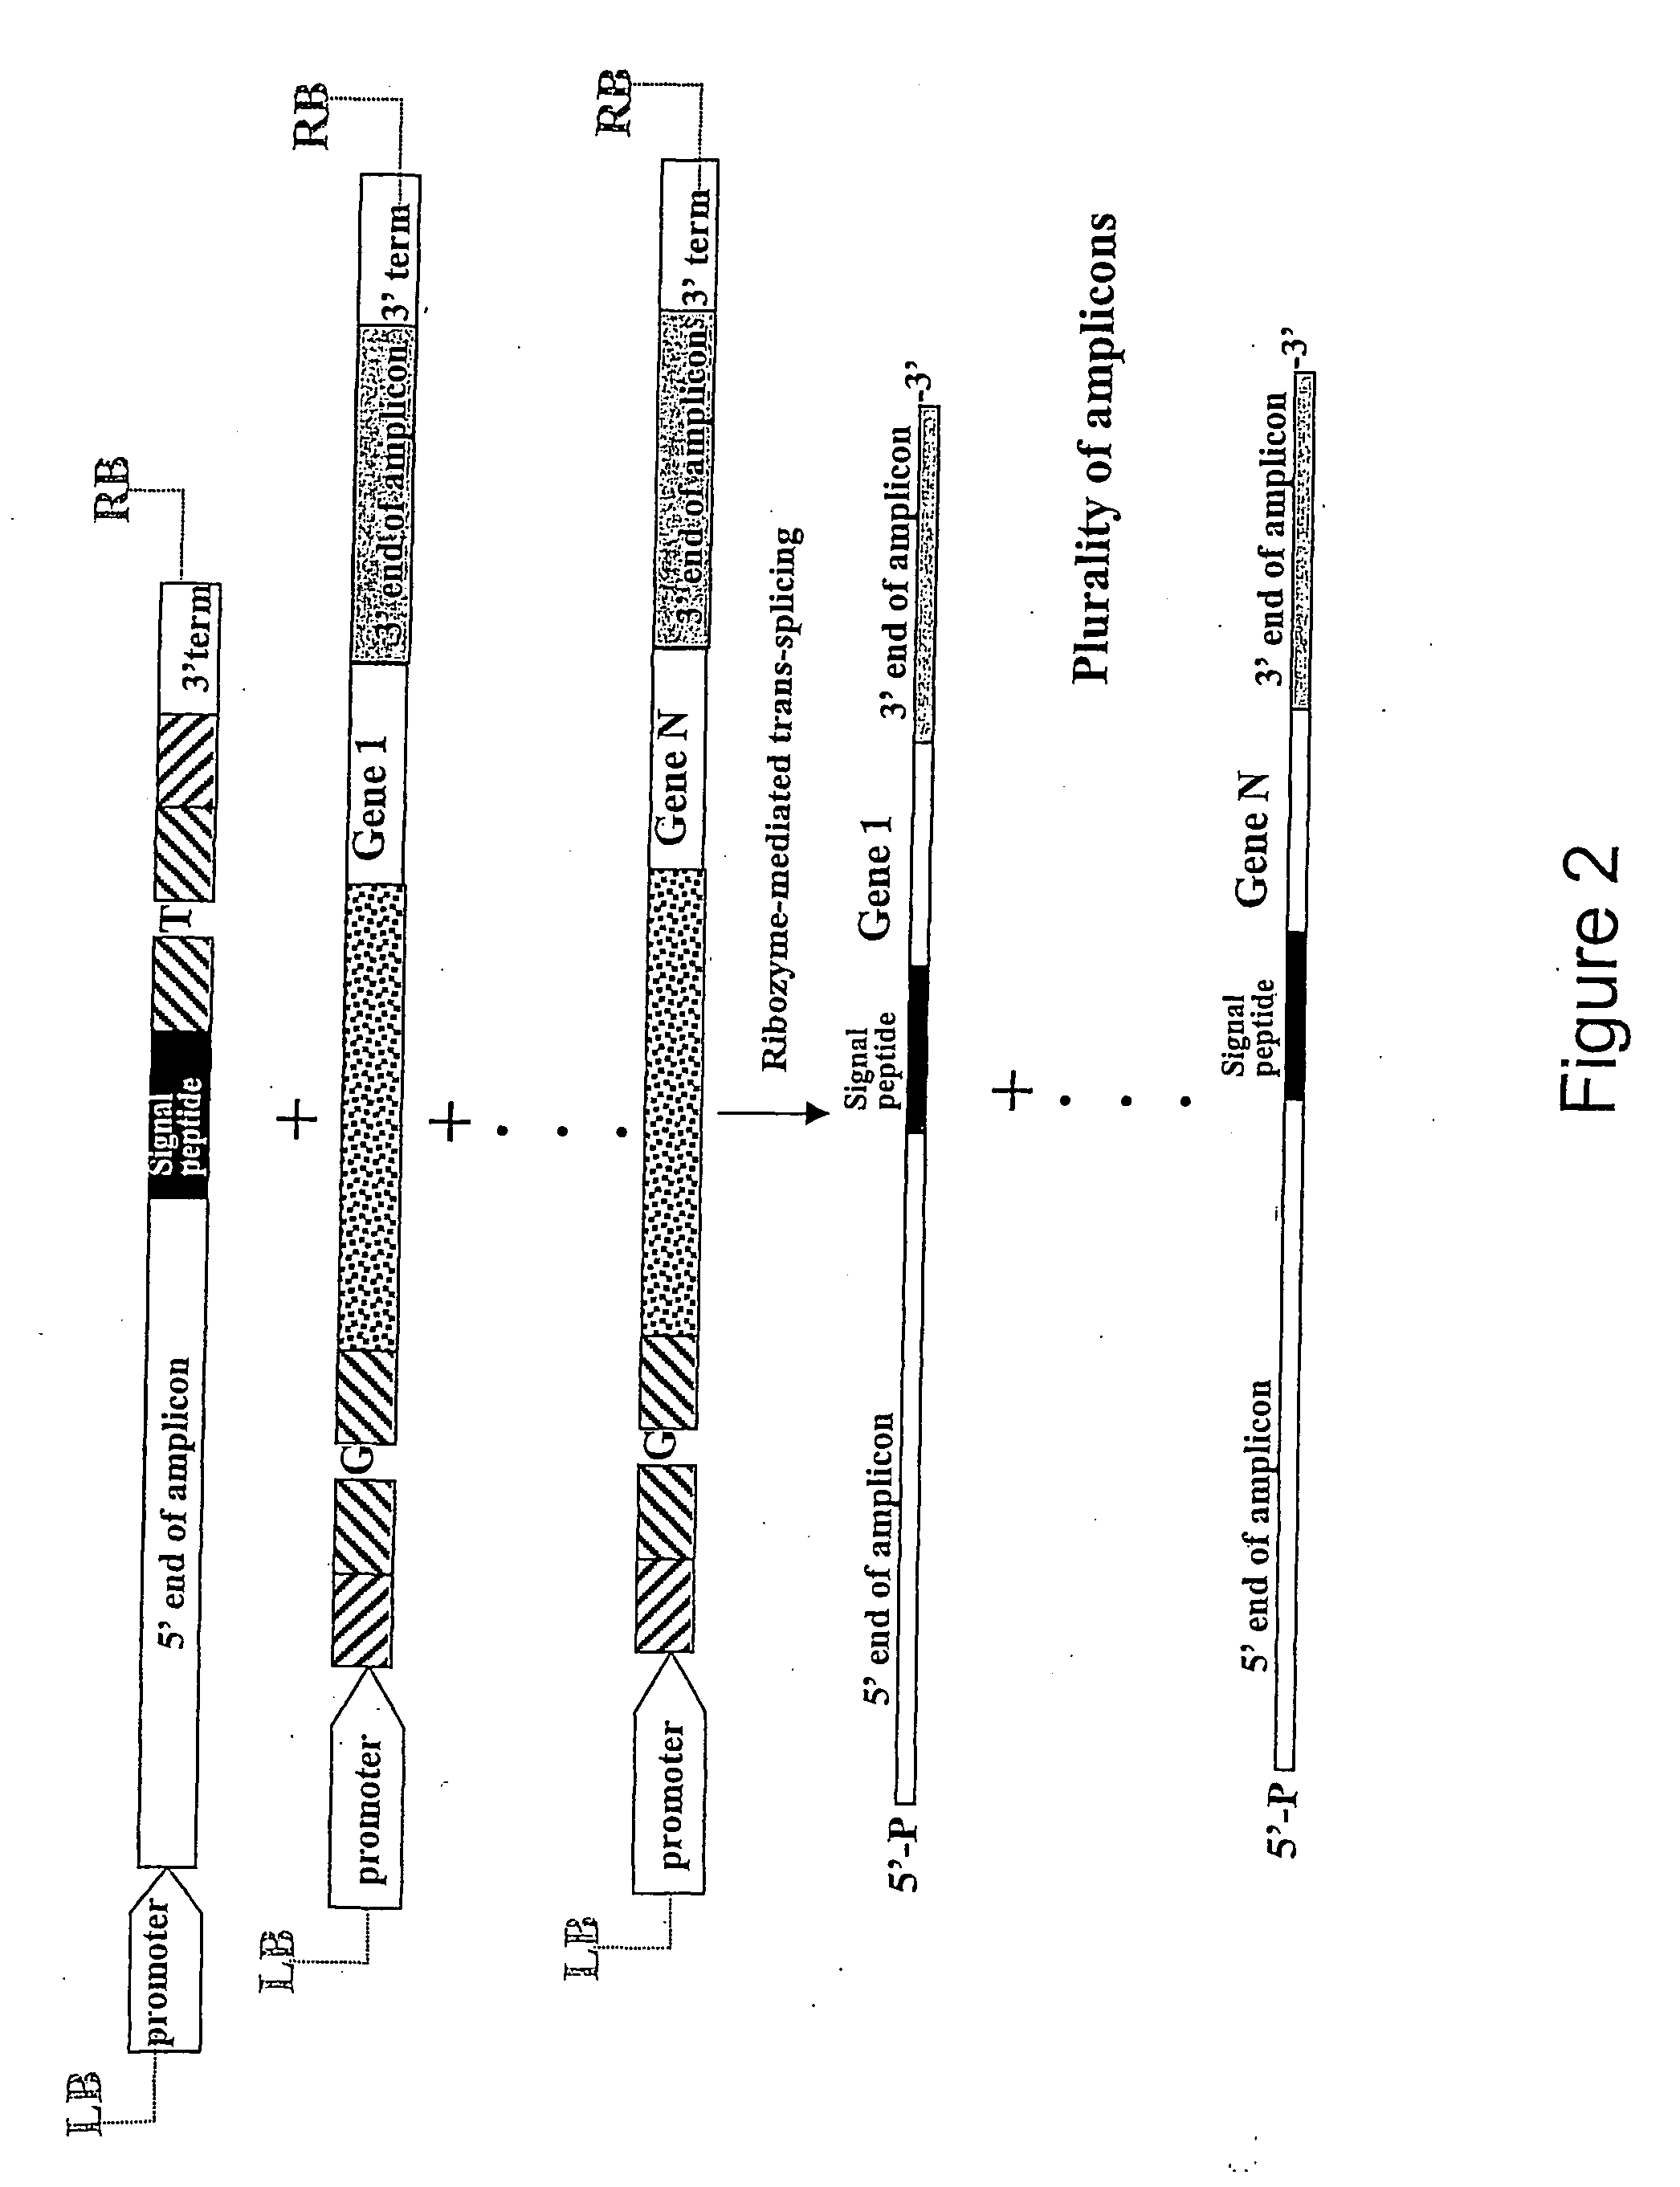 Amplification vectors based on trans-splicing